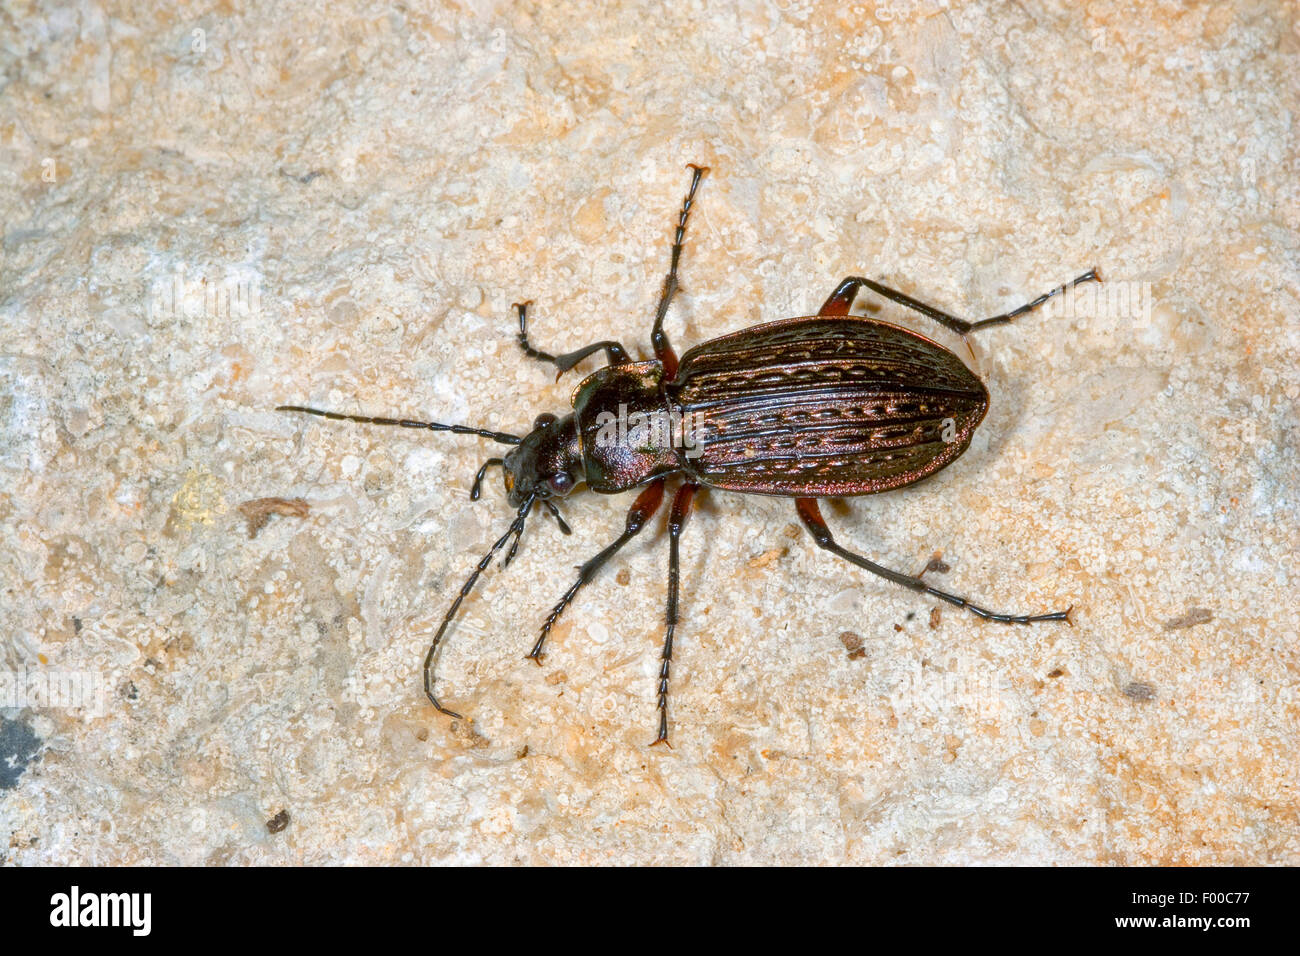 Cancellate ground beetle (Carabus cancellatus, Tachypus cancellatus), on a stone, Germany Stock Photo